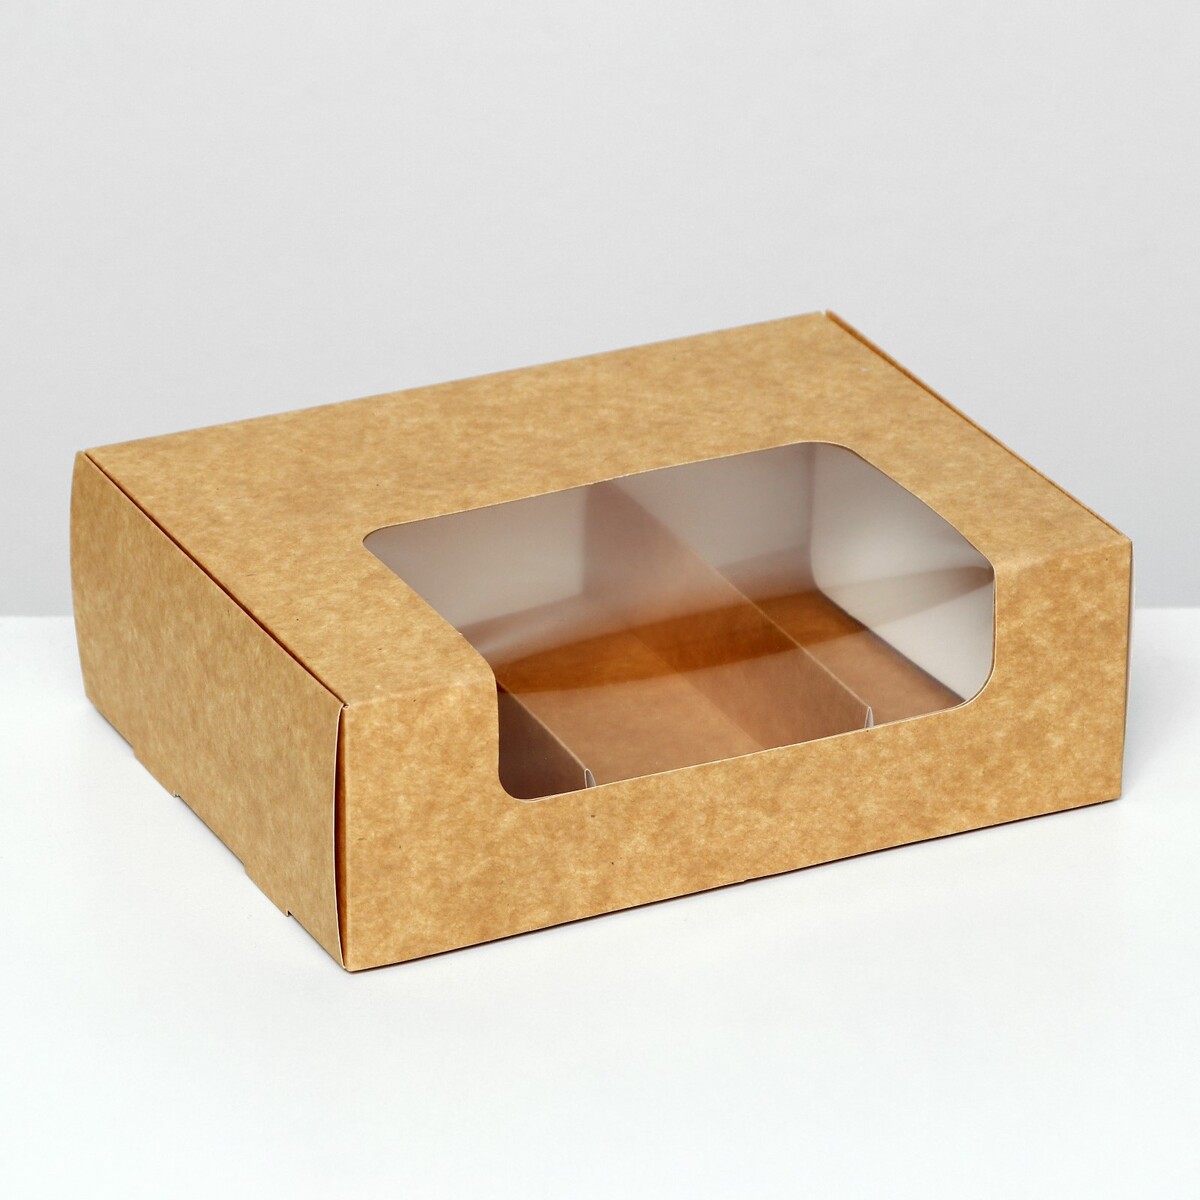 Коробка складная, под 3 эклера, крафт, 20 x 15 x 6 см коробка складная под 9 конфет крафт 13 8 х 13 8 х 3 8 см